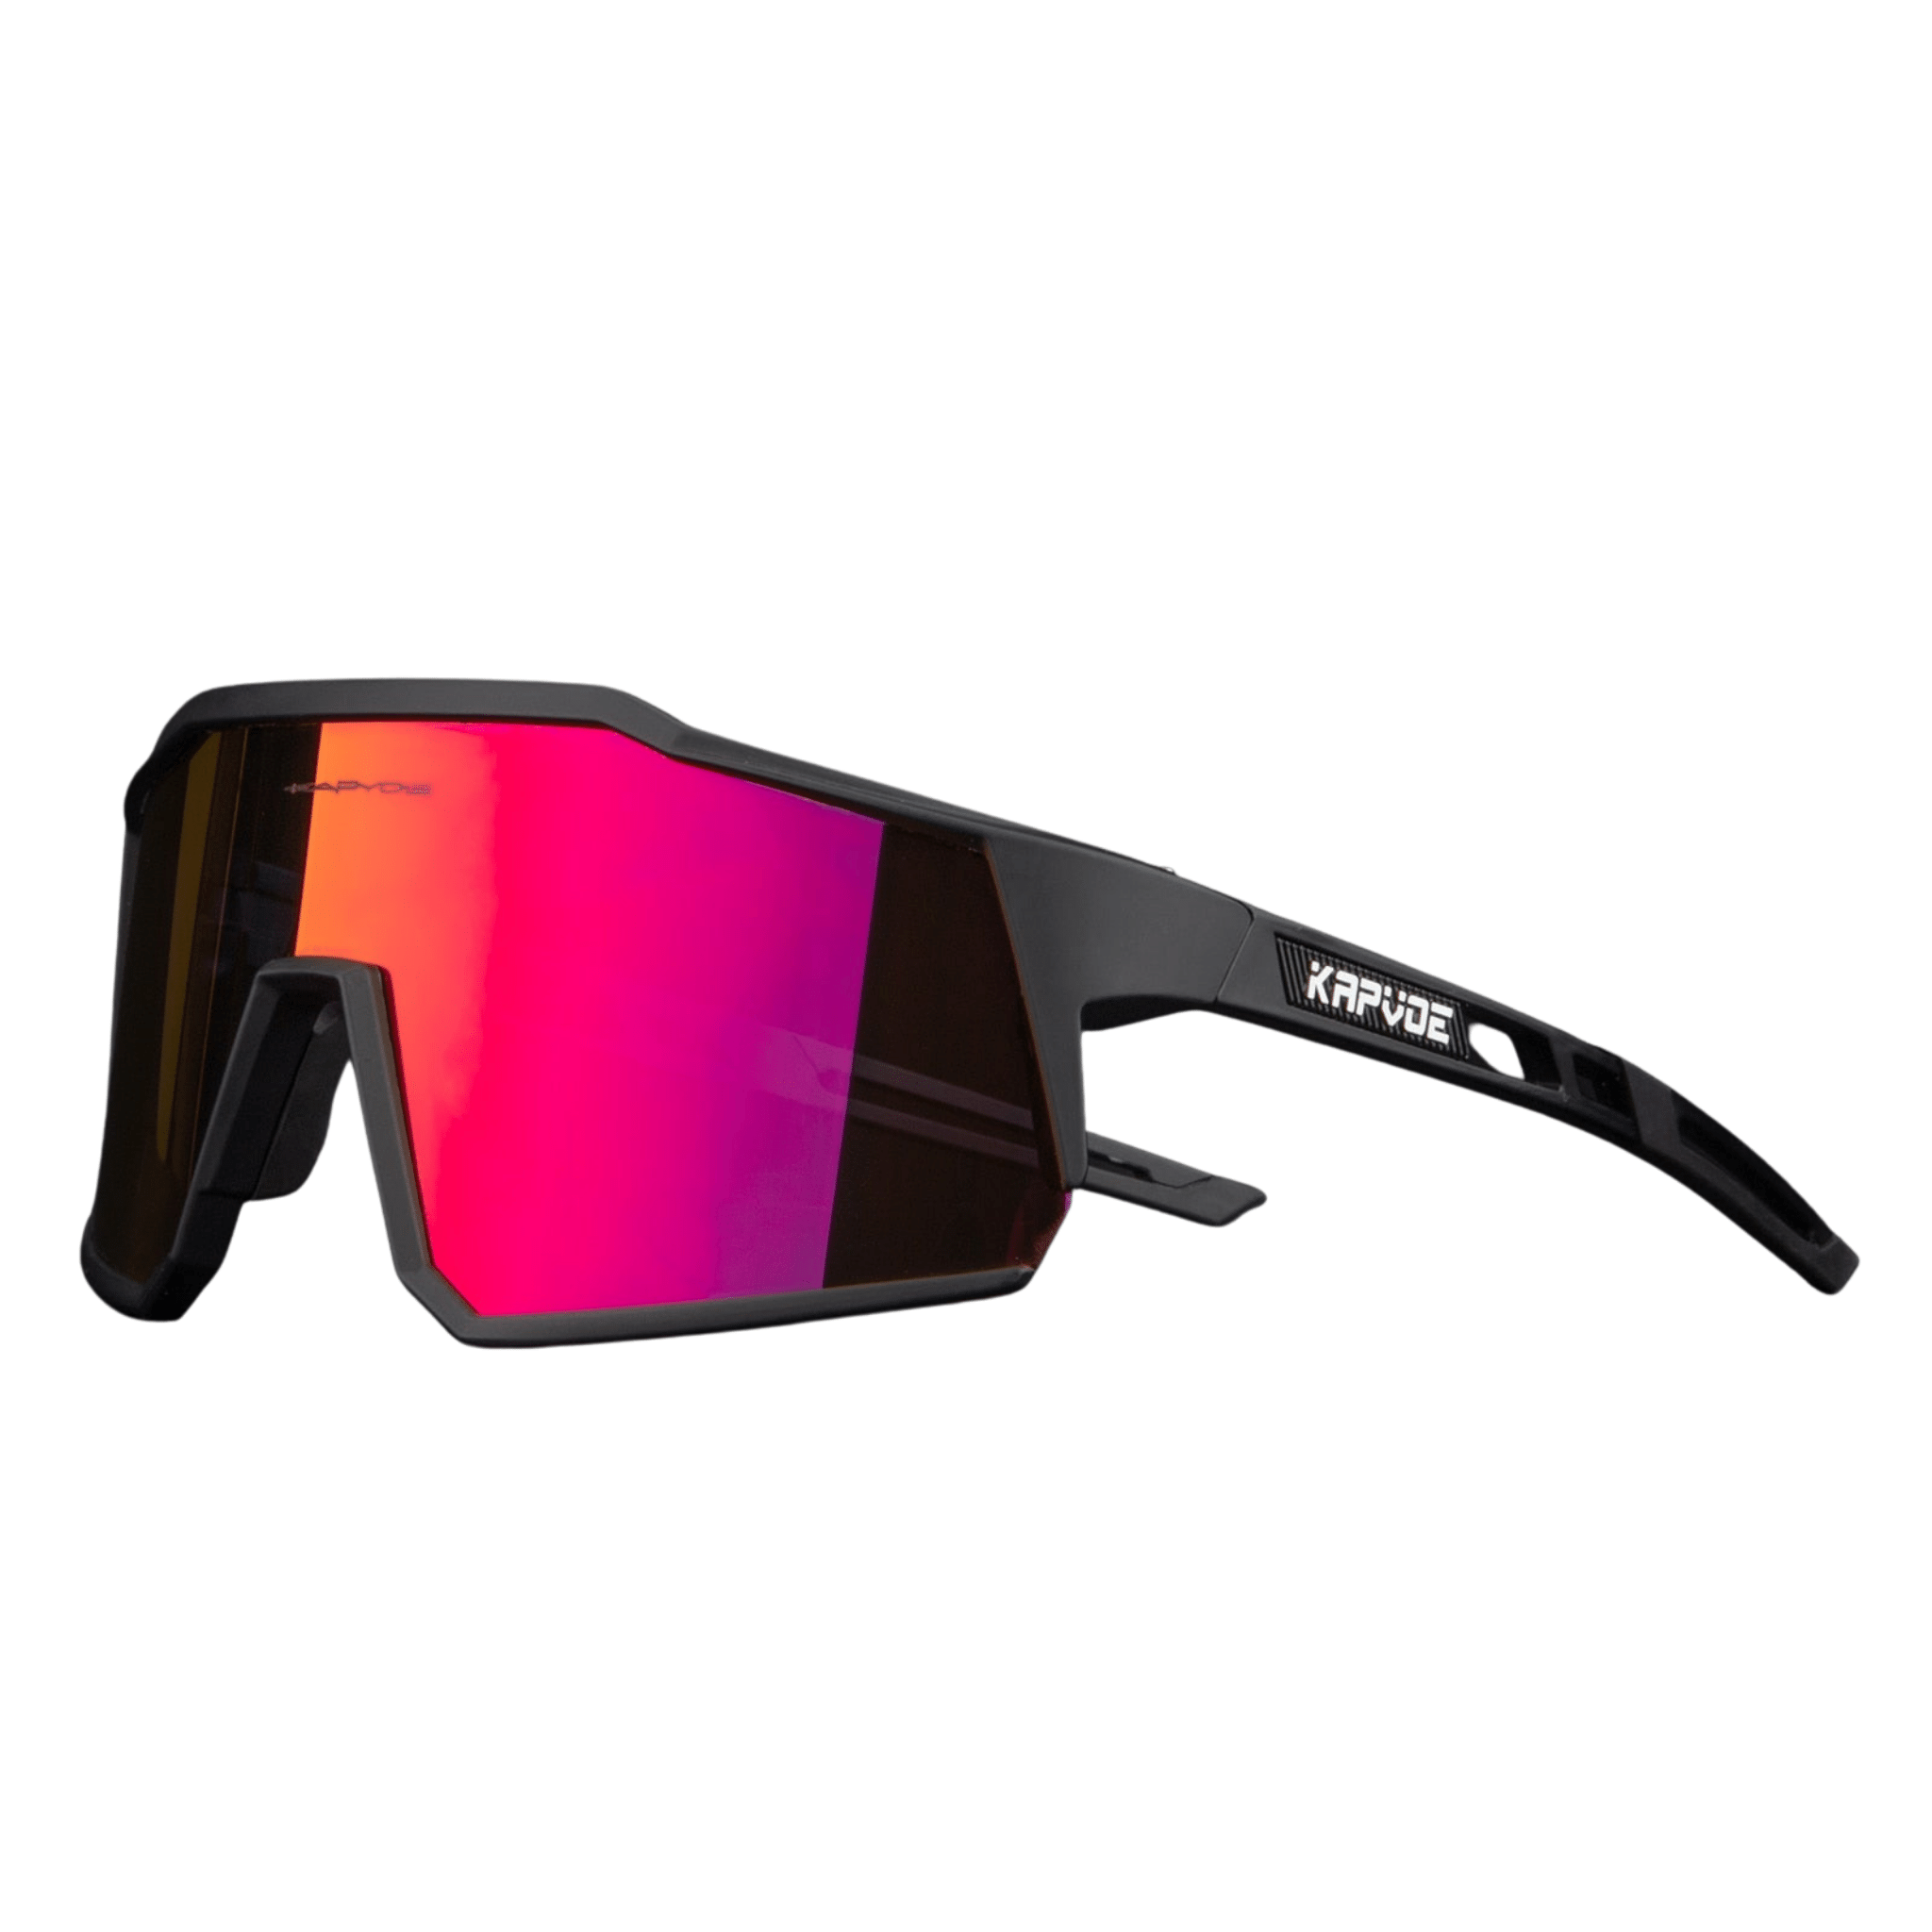 Polarized Outdoor Mountain Cycling Goggles